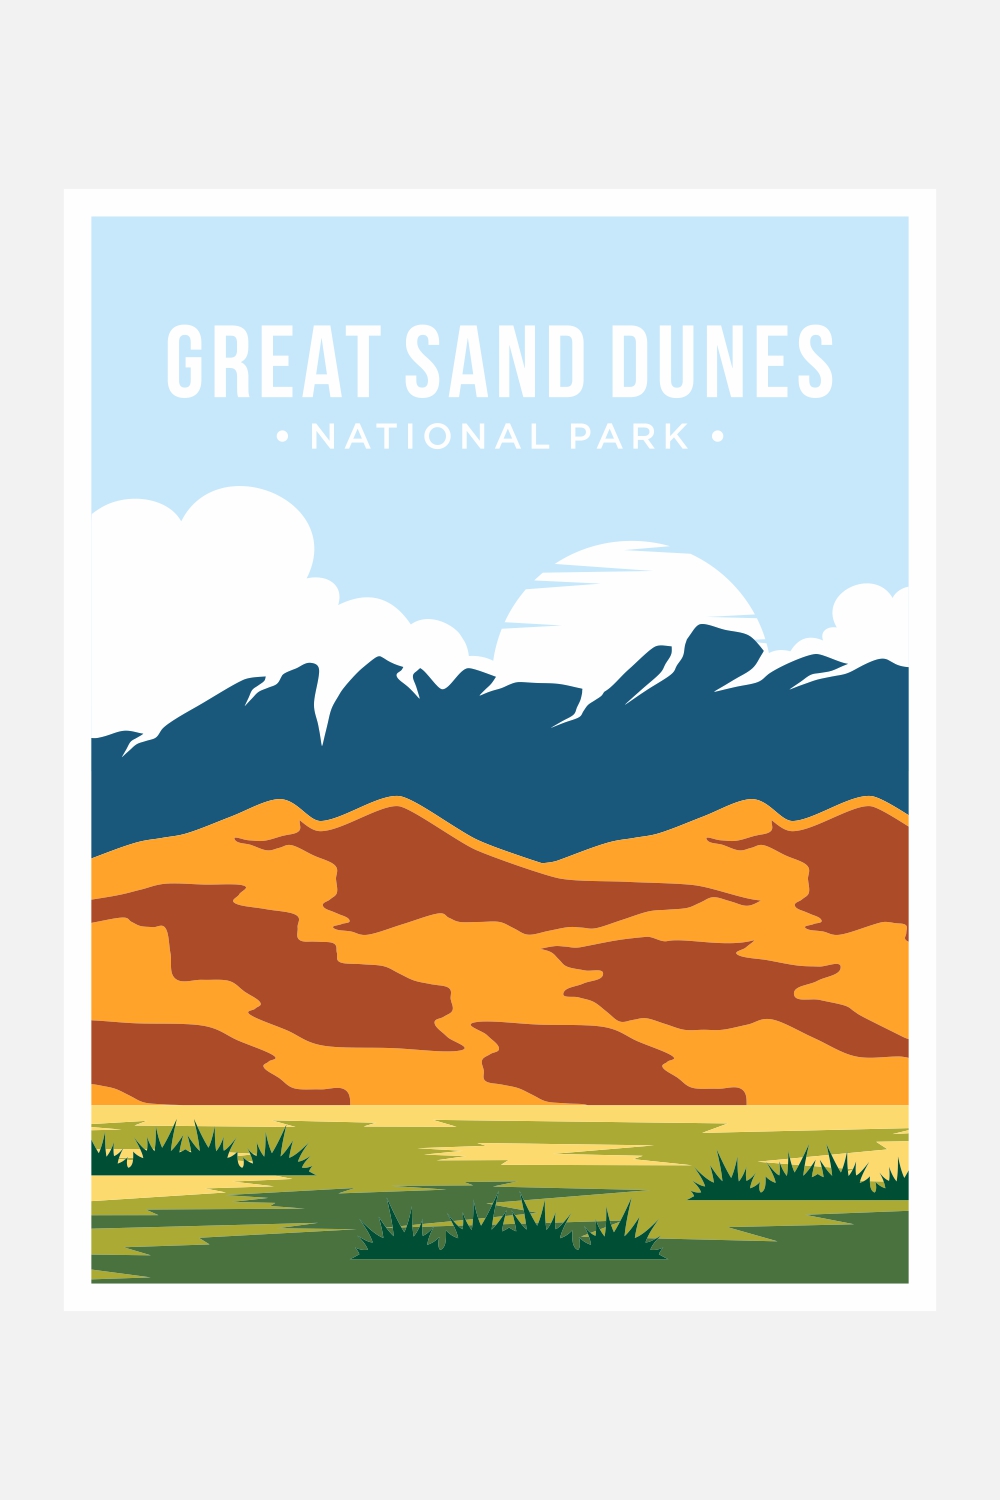 Great Sand Dune national park poster vector illustration design – Only $8 pinterest preview image.